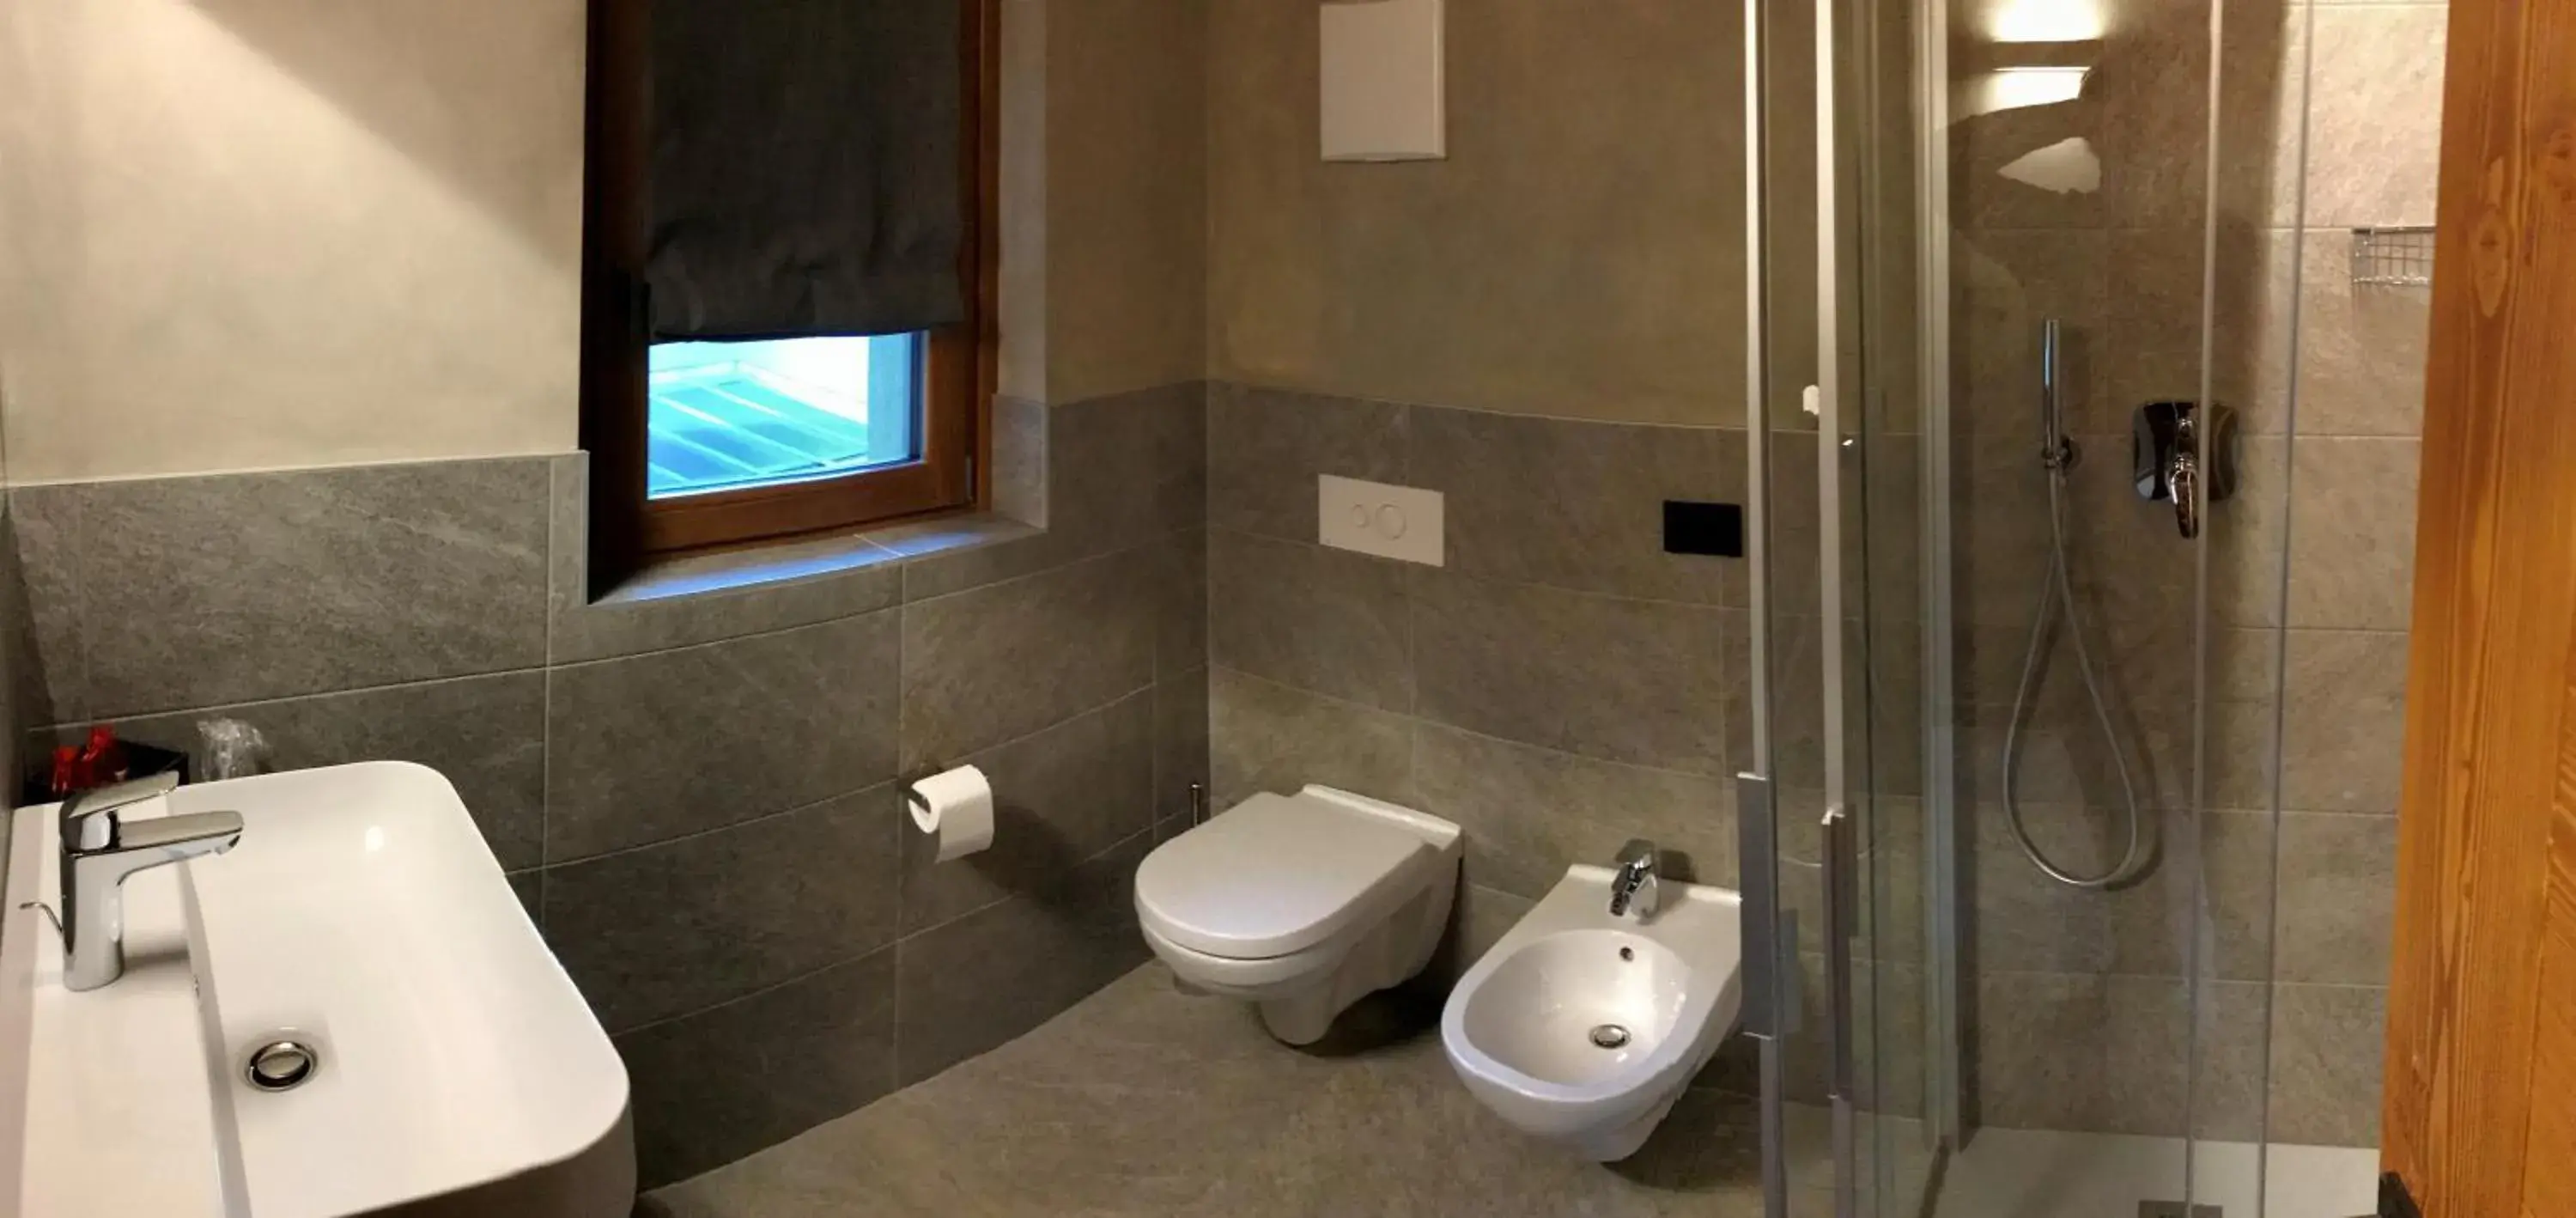 Bathroom in Hotel san Vitale